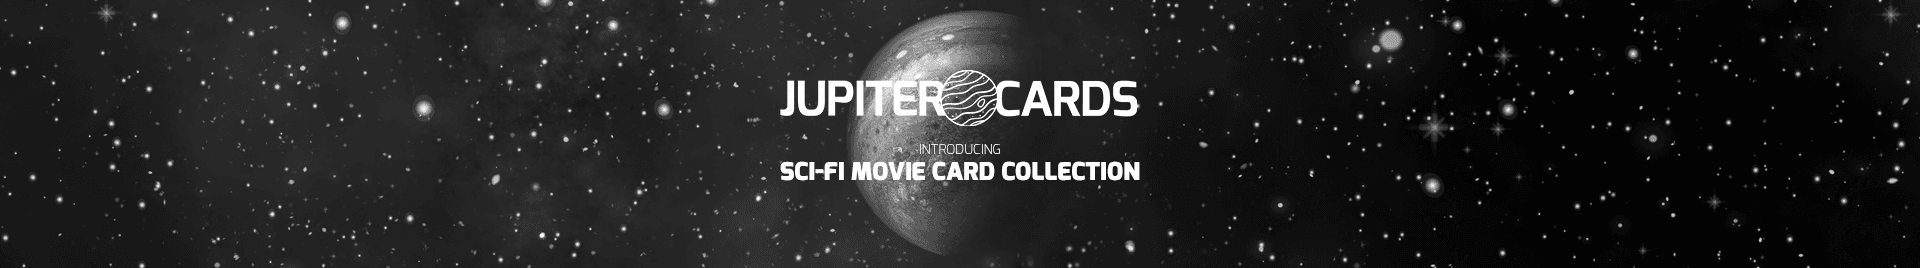 Jupiter_Cards 横幅